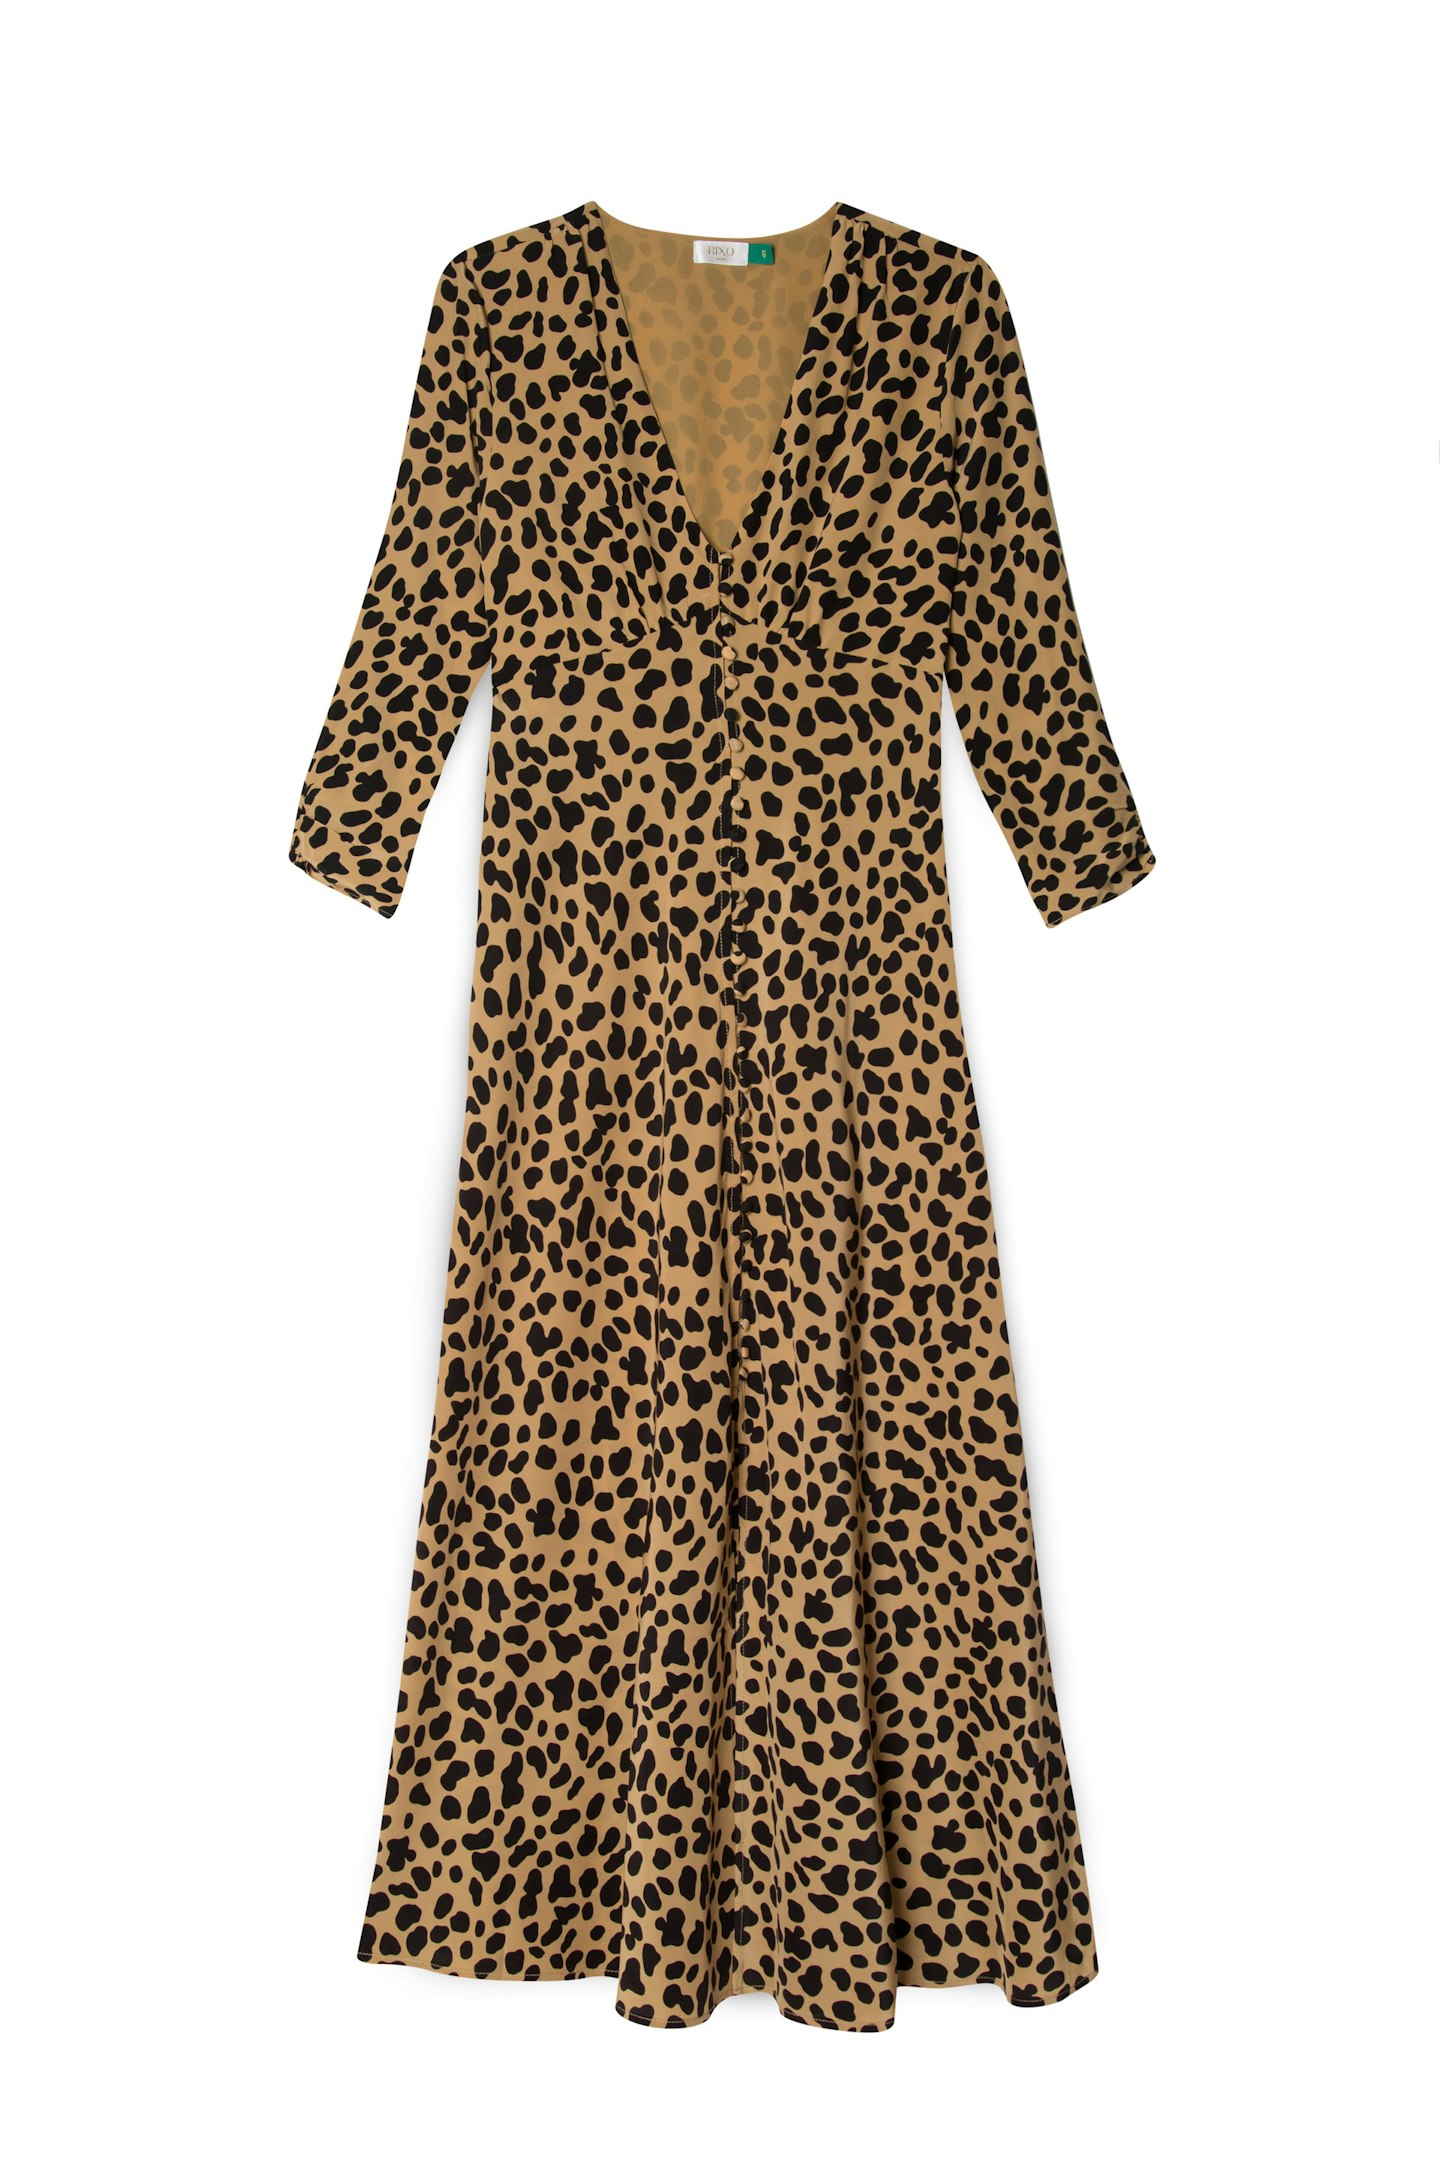 Rixo, Katie Camel Spot Leopard, £295